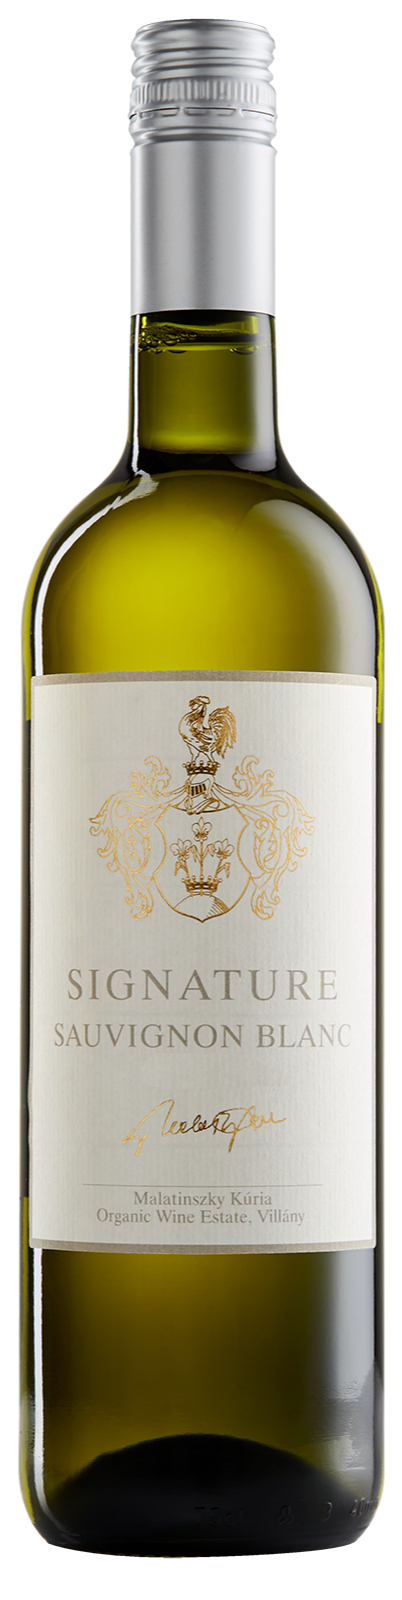 Signature Savignon Blanc bio/vegan, Bor - Malatinszky Kúria Organic Wine Estate